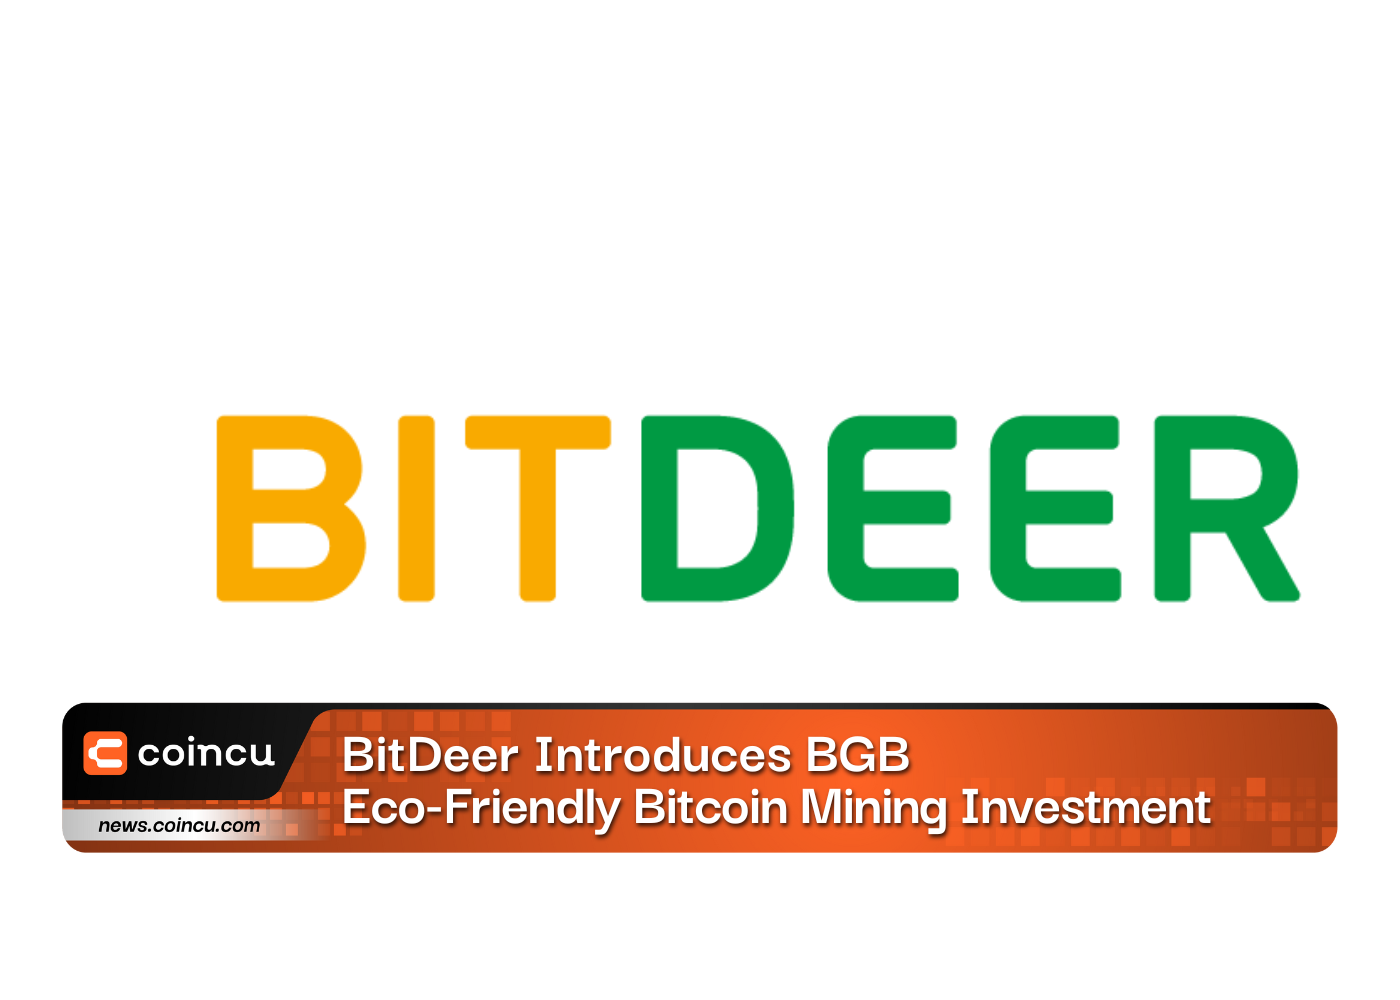 BitDeer Introduces BGB